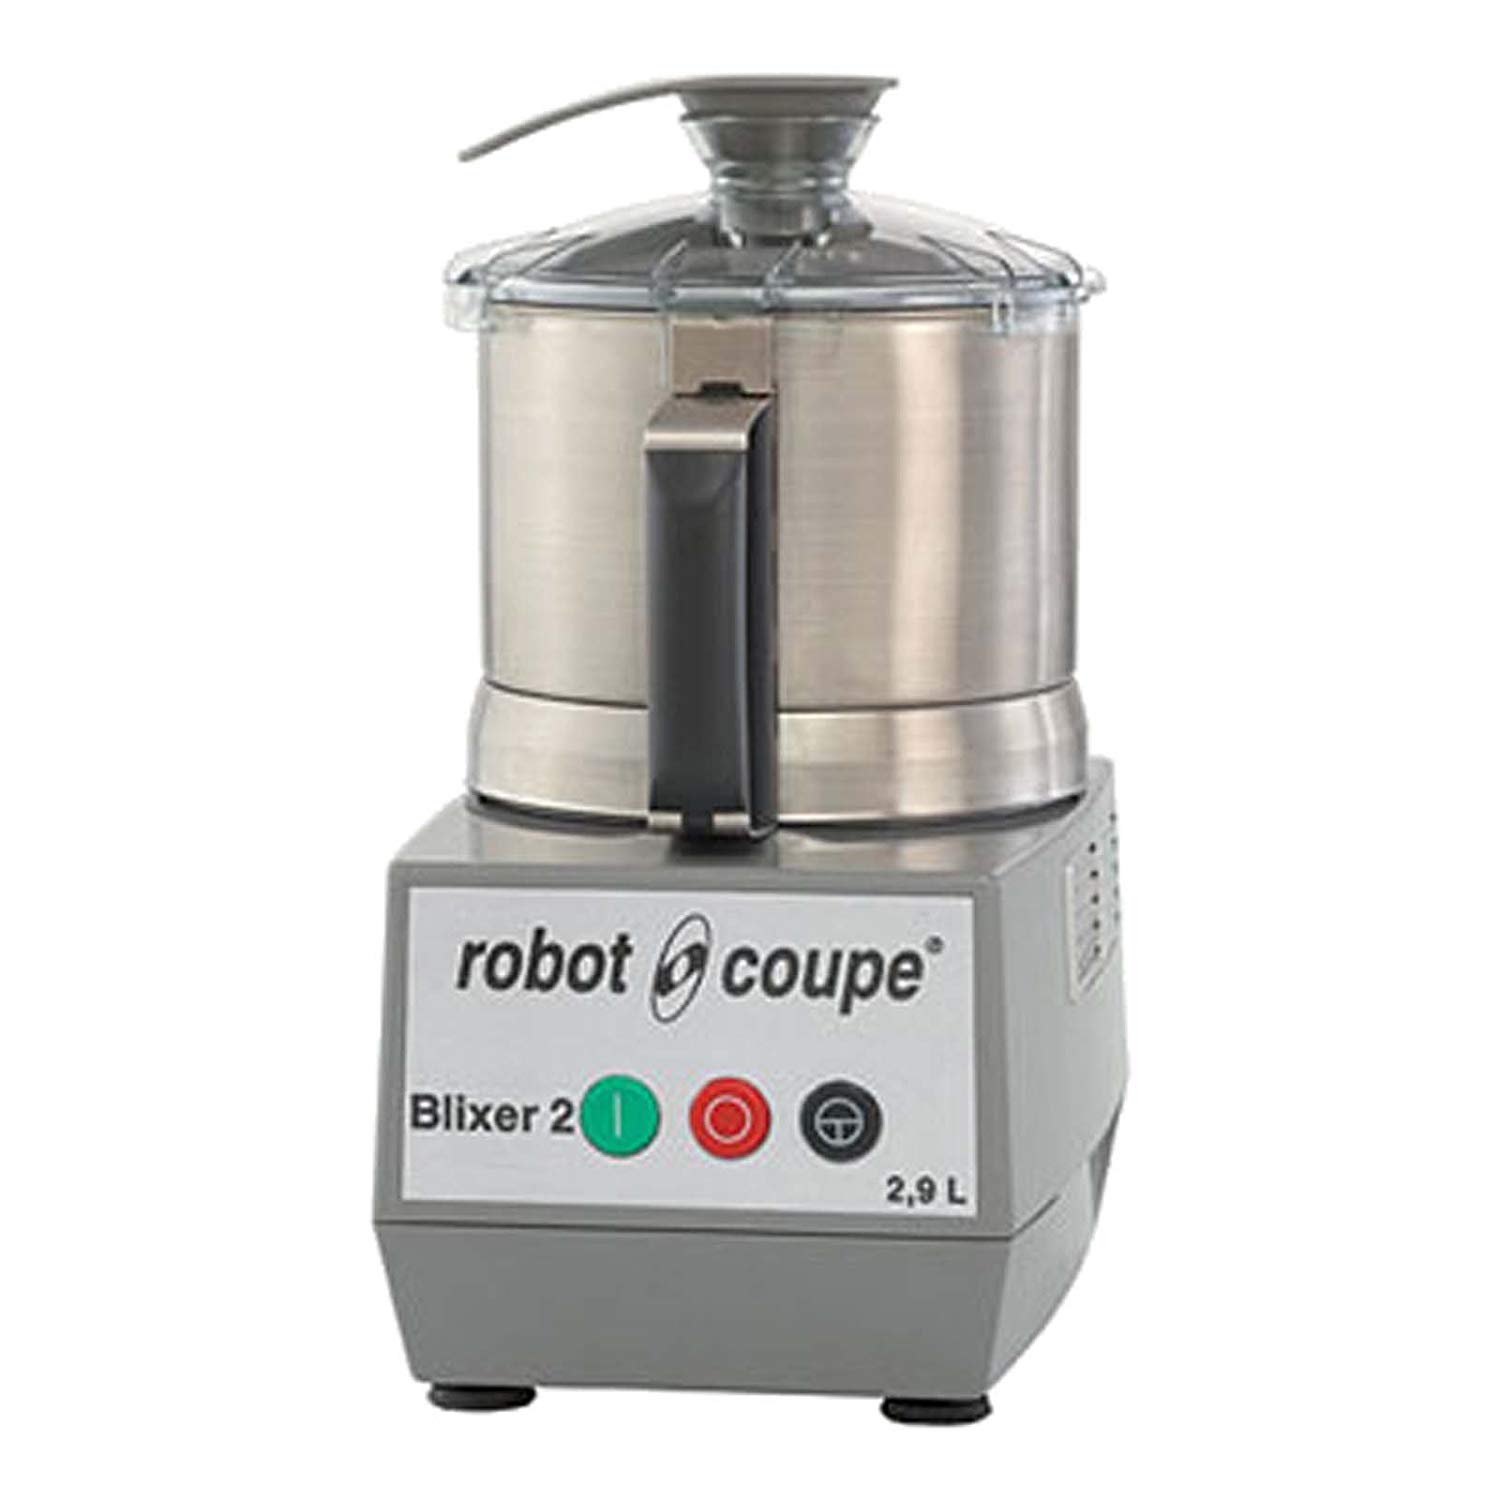 https://www.plantbasedpros.com/wp-content/uploads/2018/10/Robot-Coupe-Blixer-2.jpg